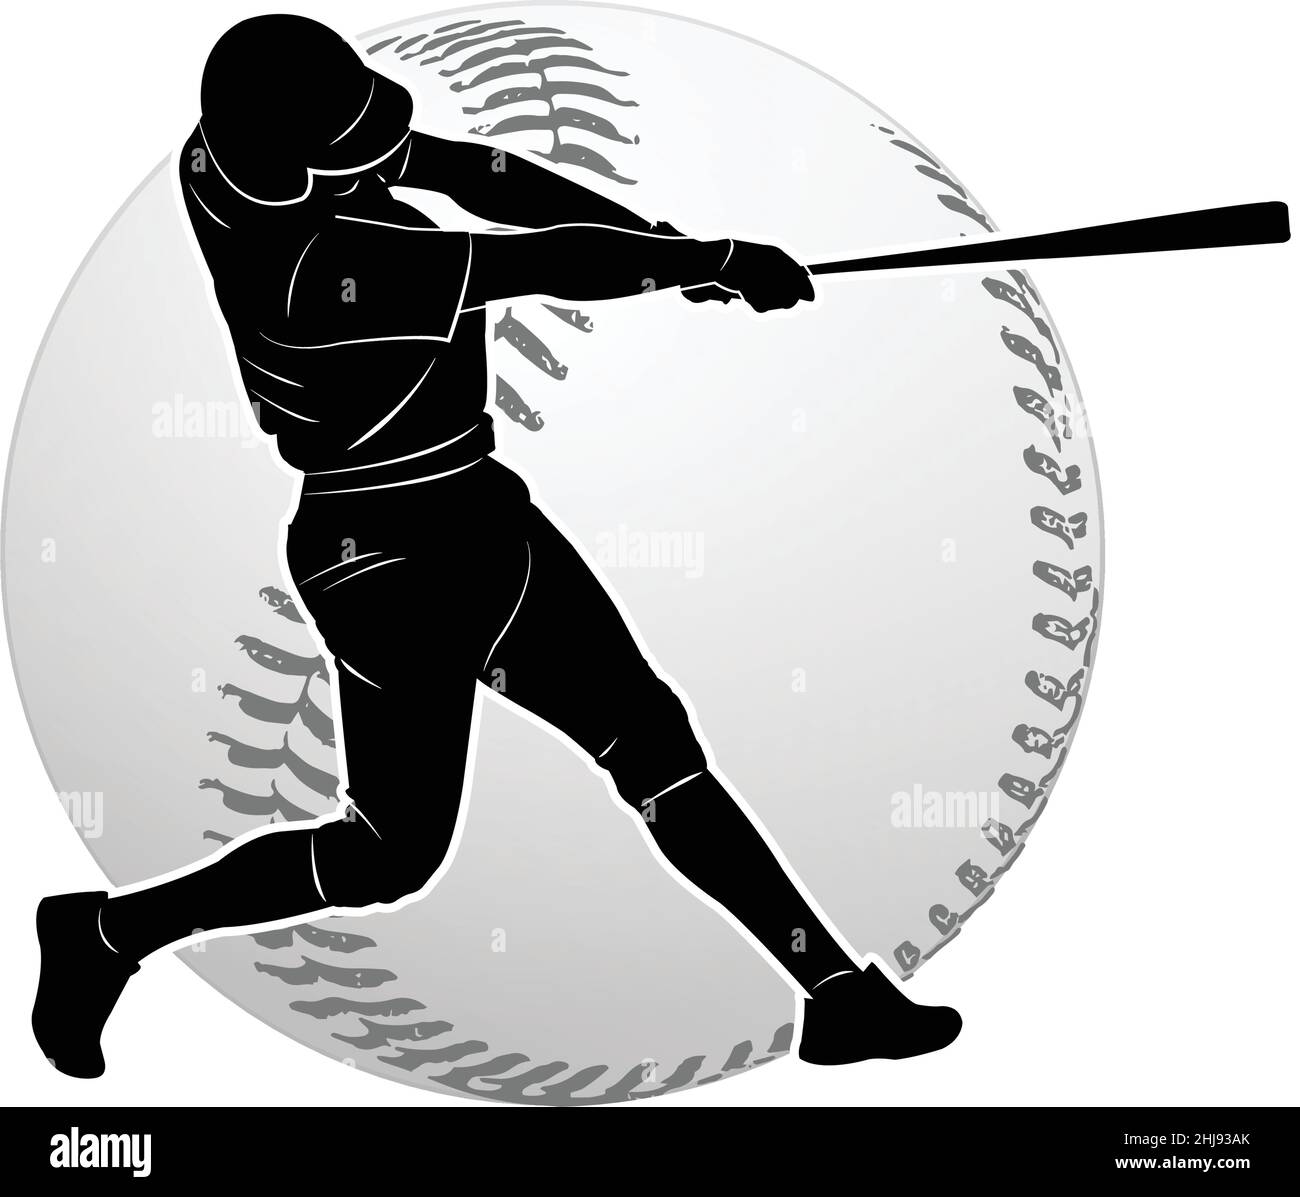 baseball player silhouette - vector Stock Vector